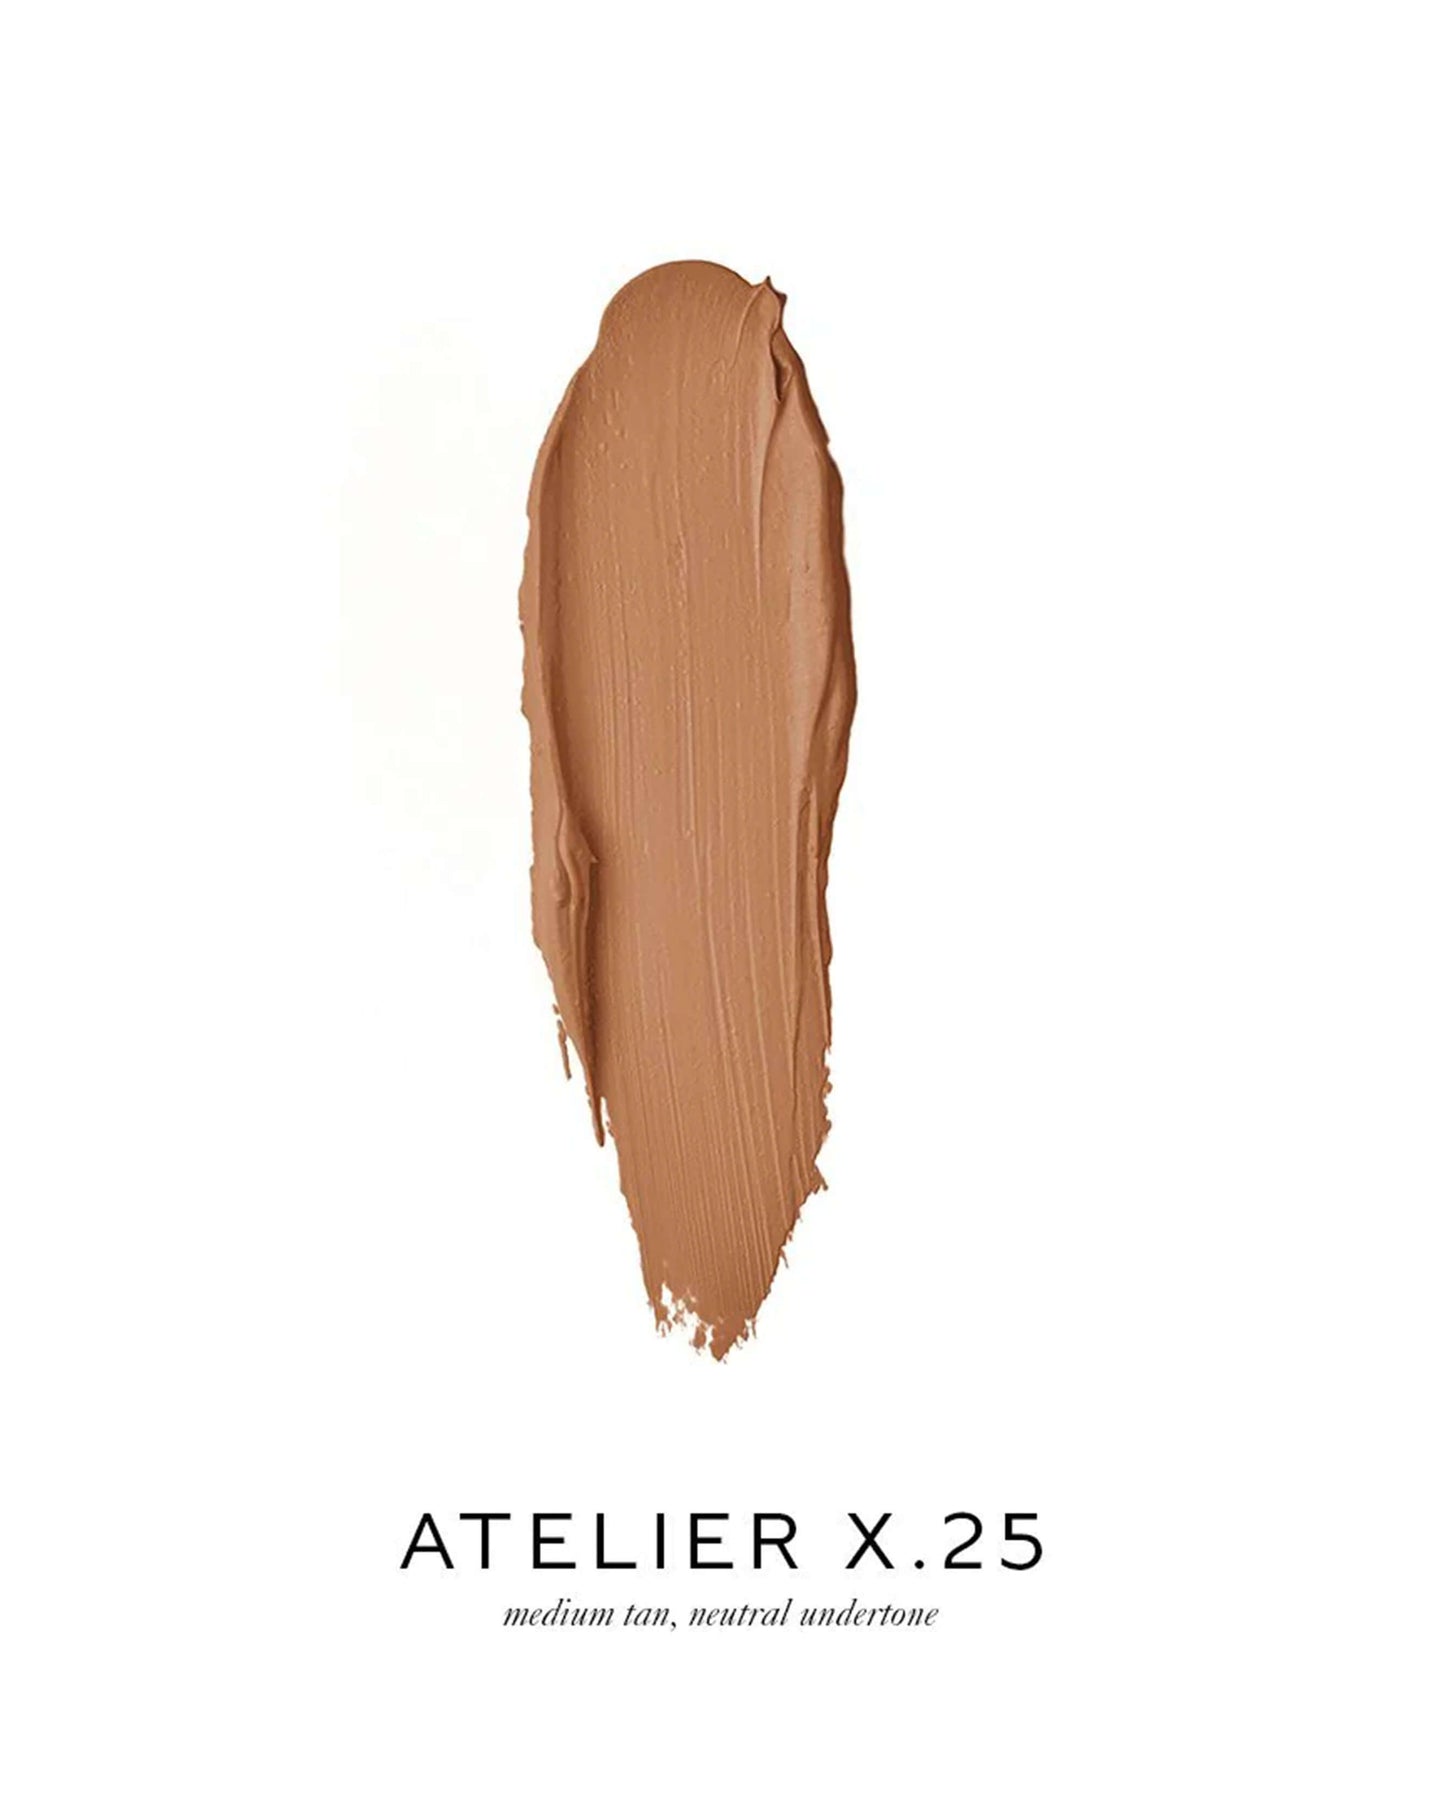 Atelier X.25 (medium tan, neutral undertone)